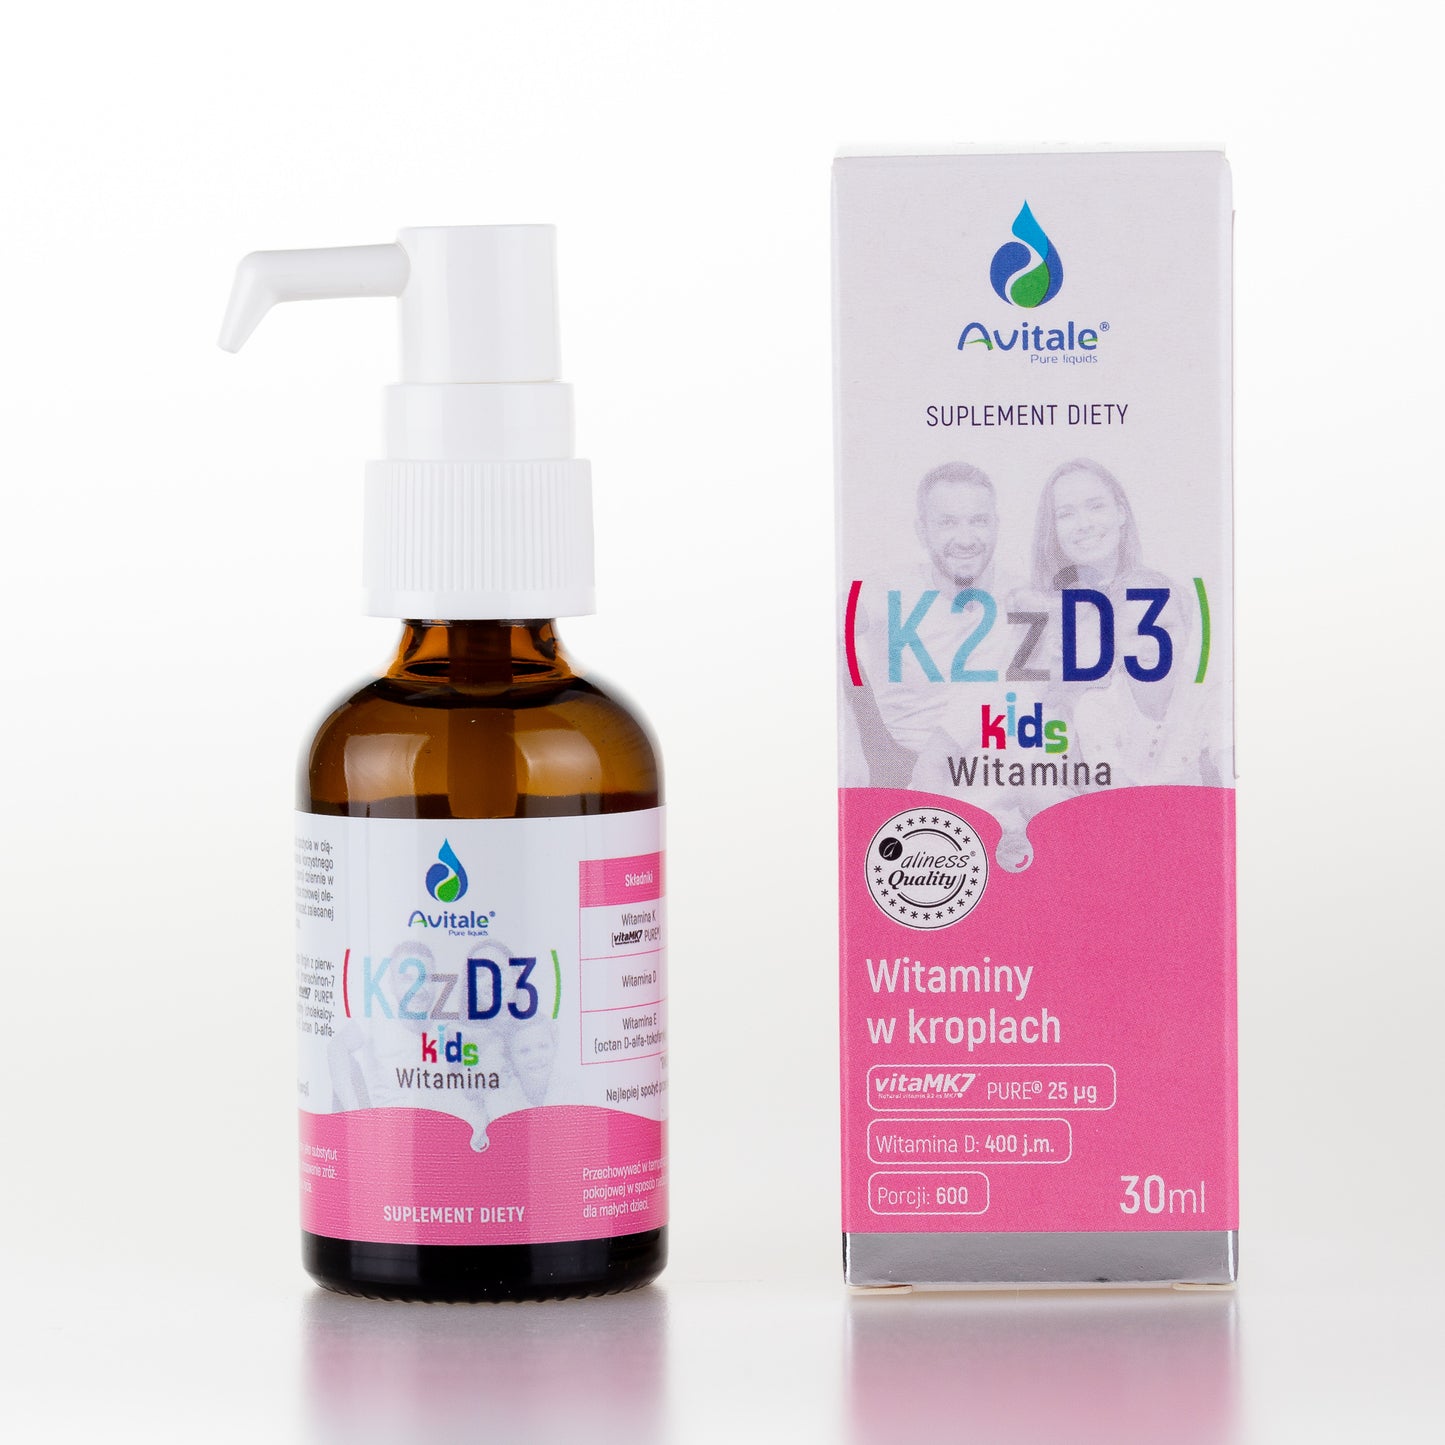 Avitale K2 with D3 KIDS, 30 ml (600 servings) vitamins in drops for children